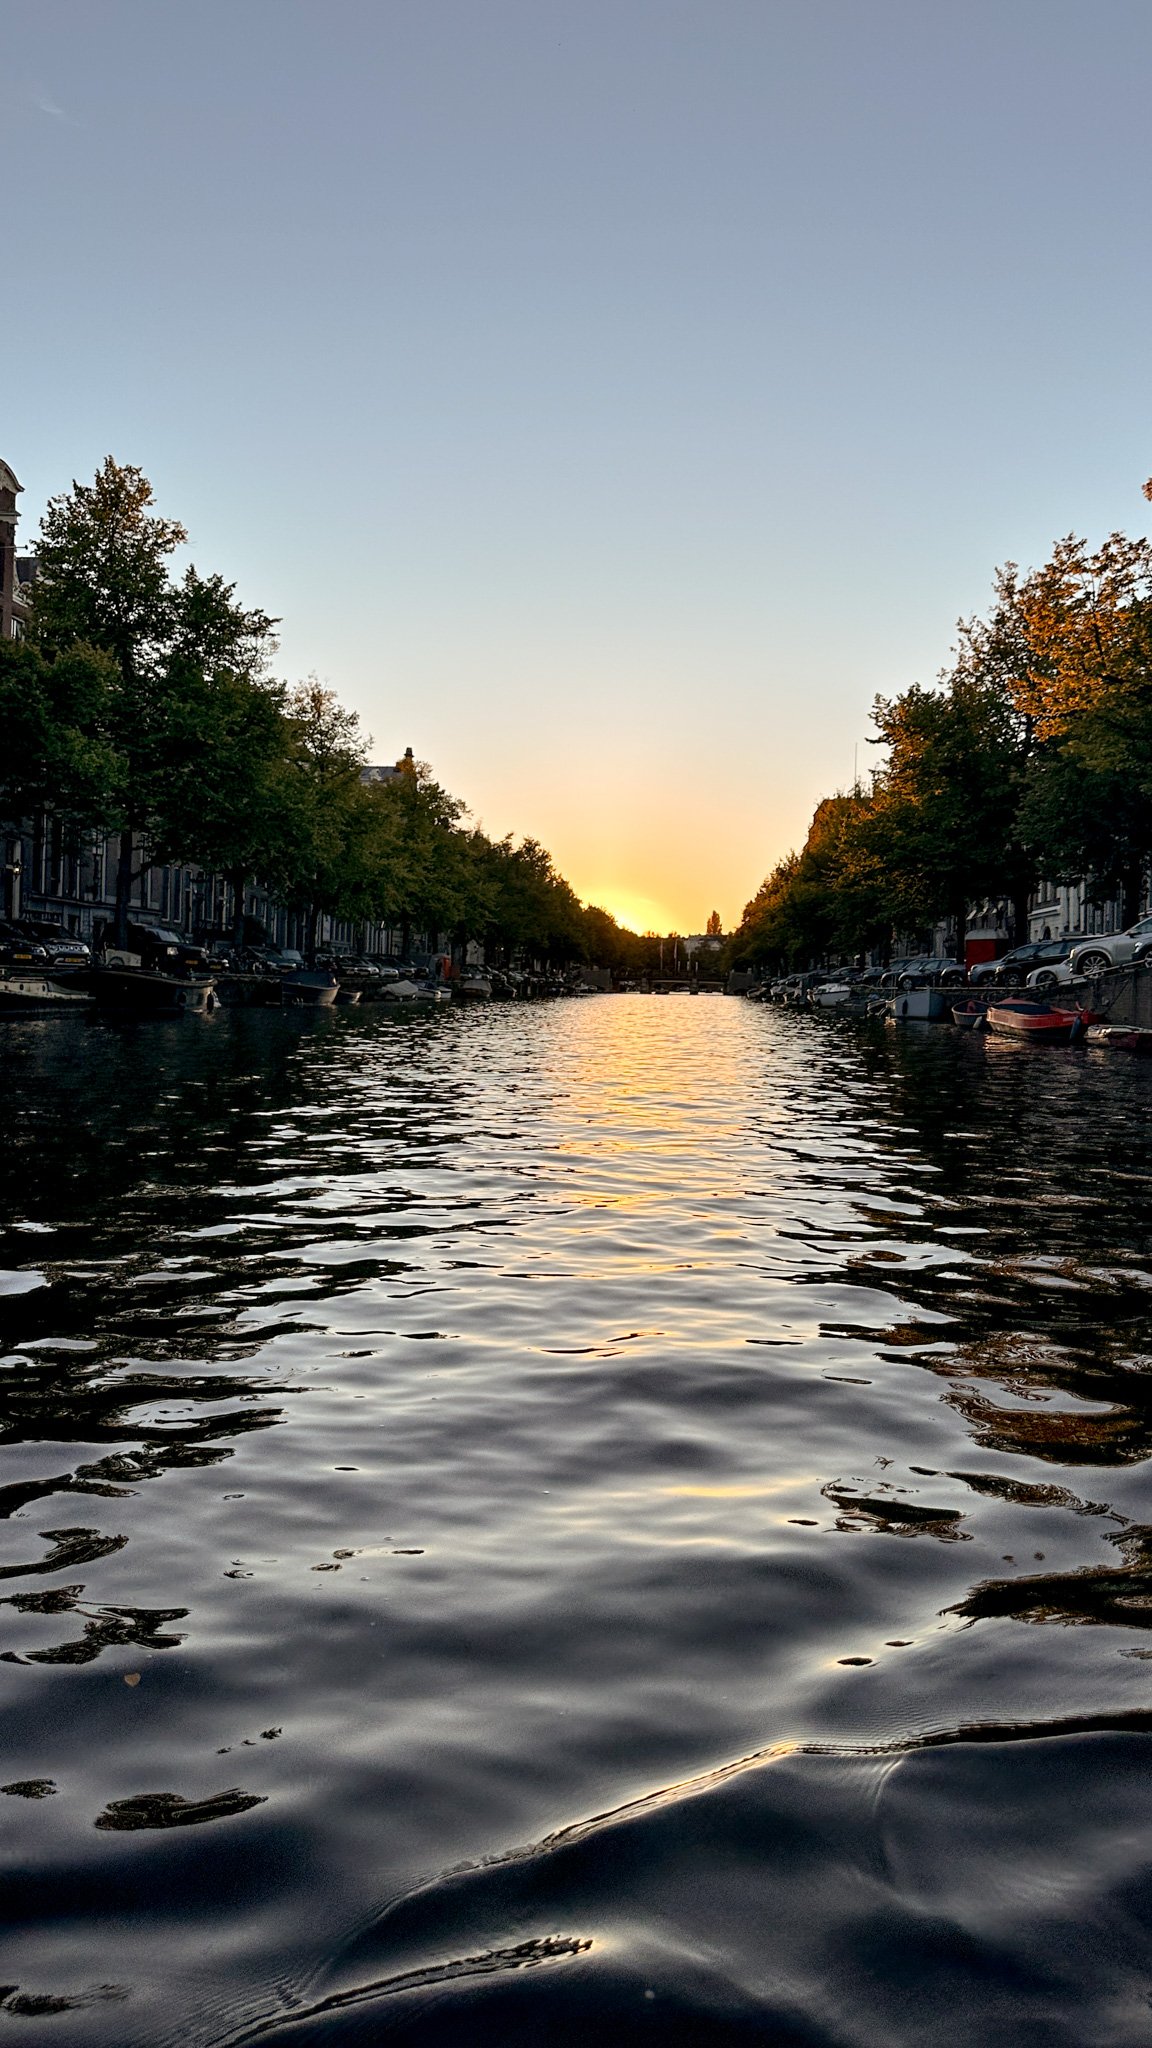 Amsterdam Boat Trips Canal Cruise - Amanda N Hammond-06.jpg